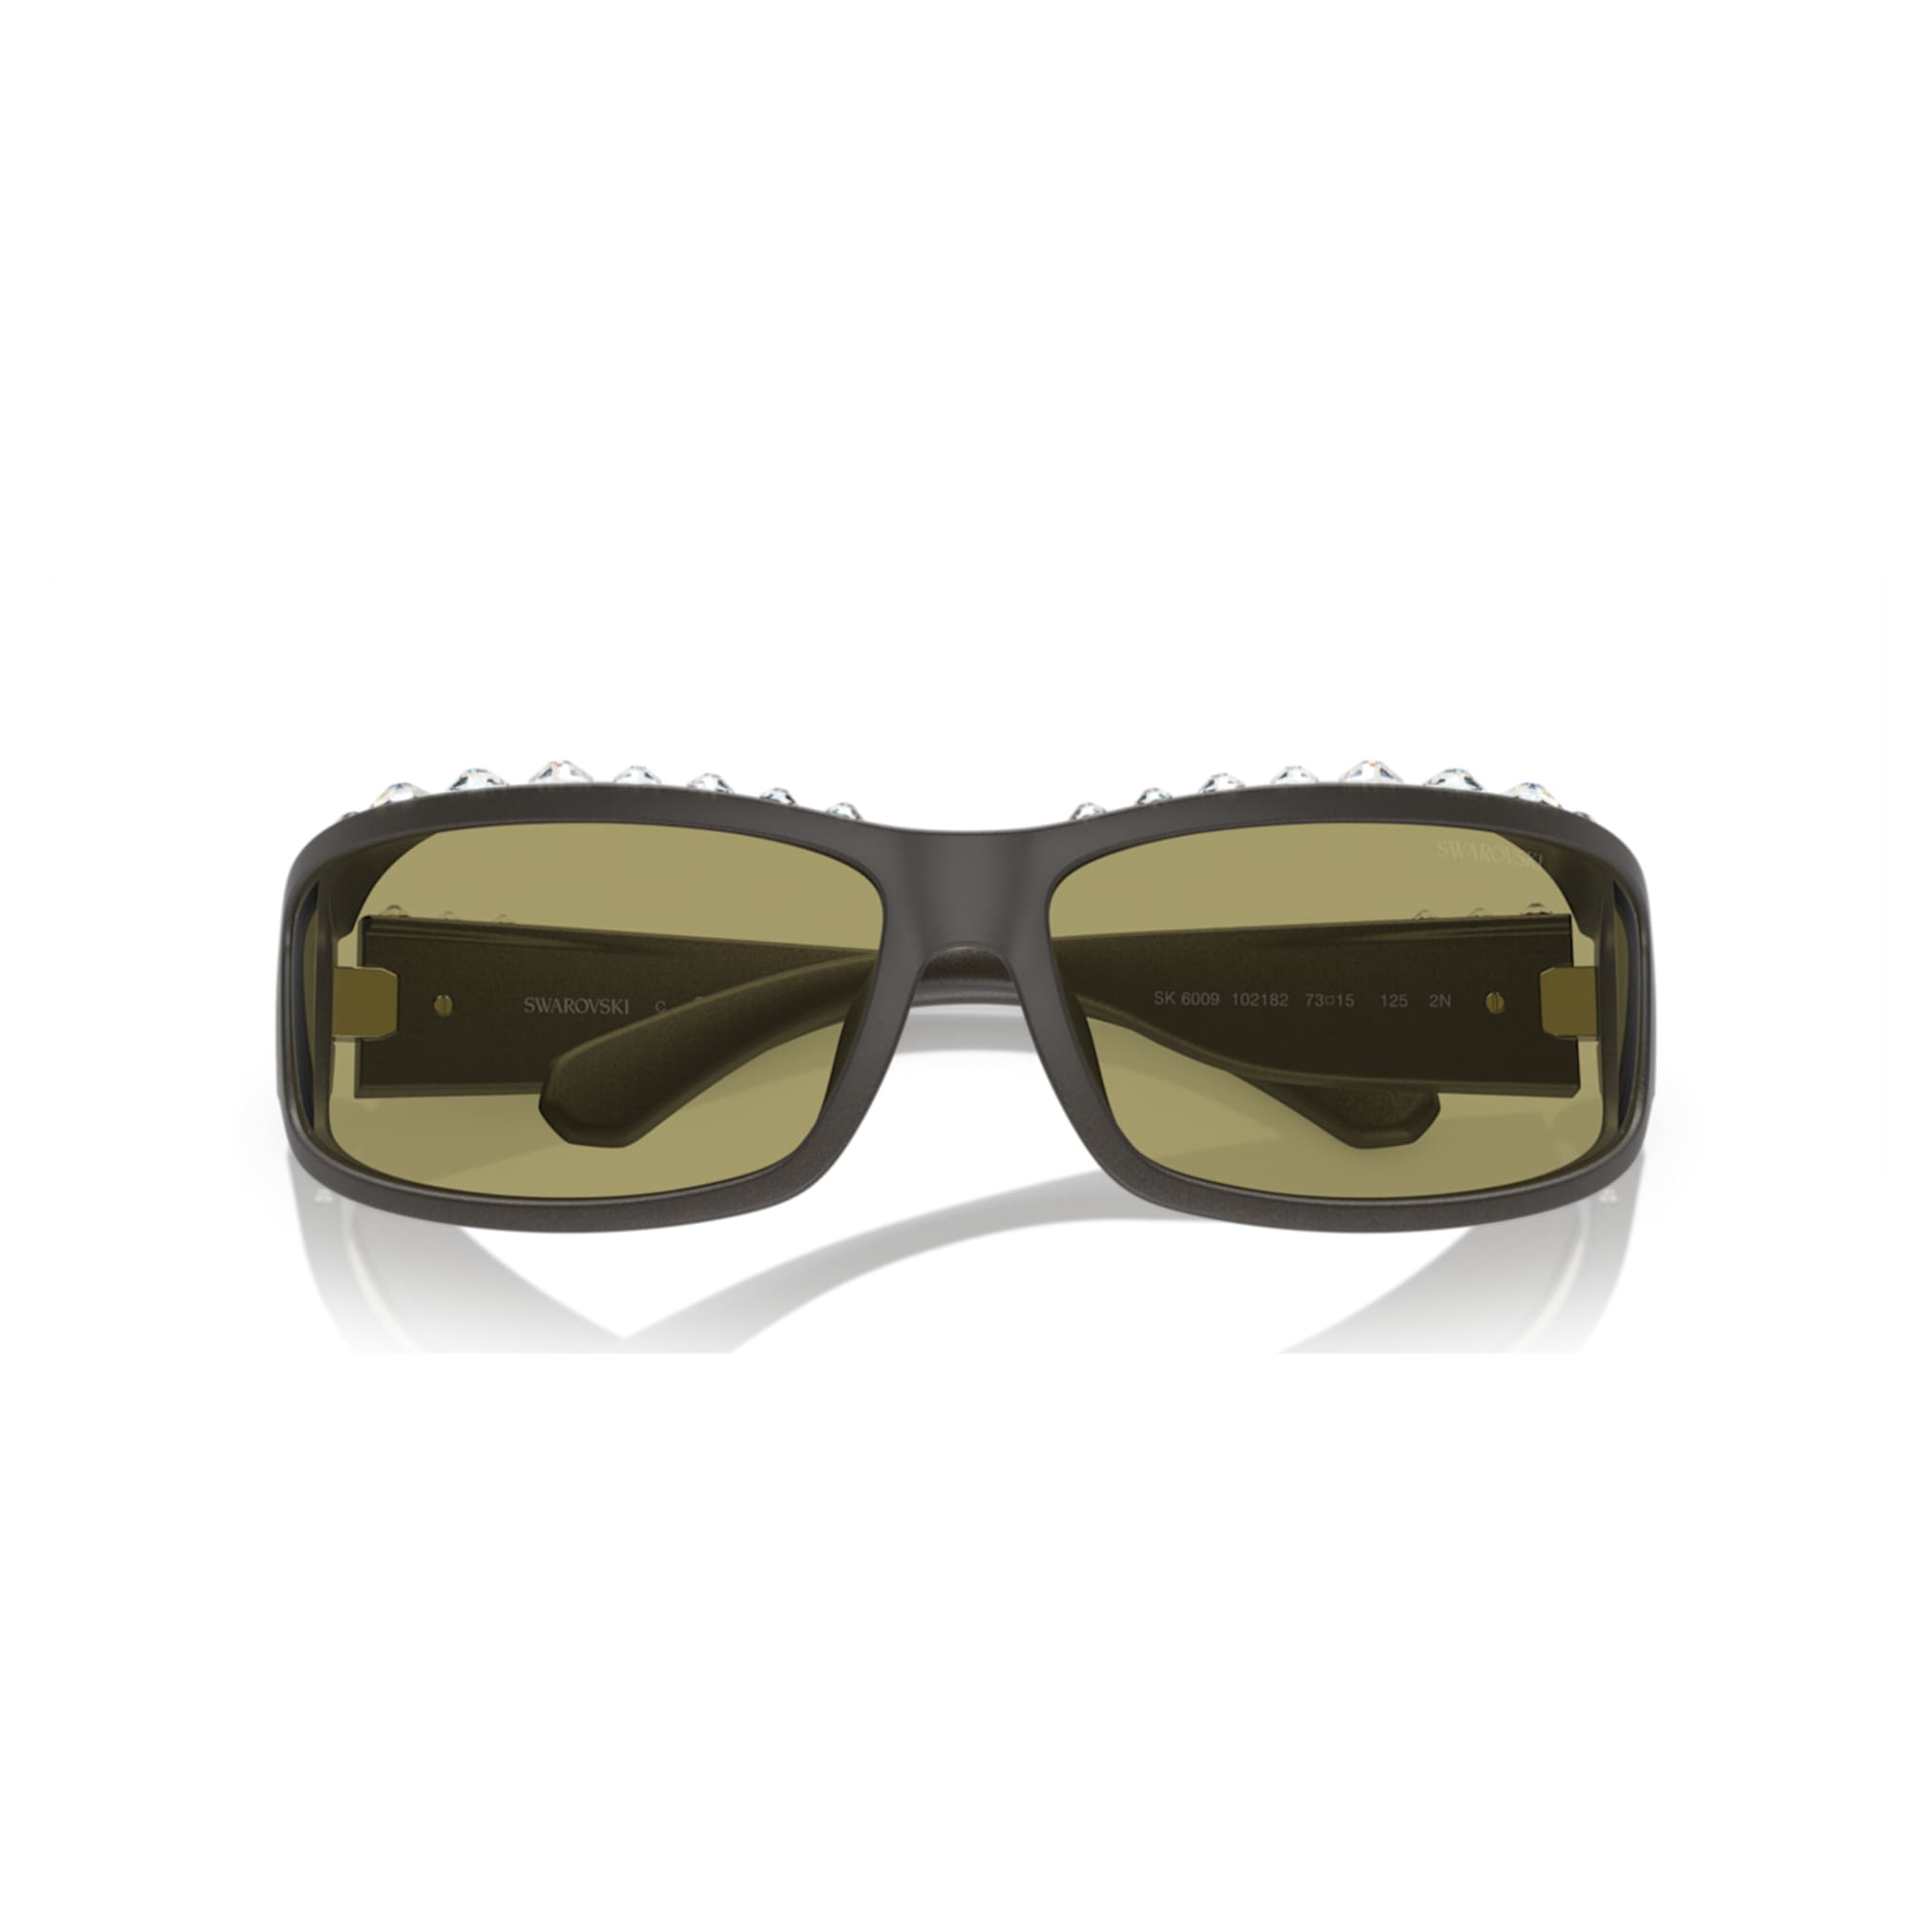 Sunglasses, Pilot shape, Gradient tint, SK0343-H 36F, Brown